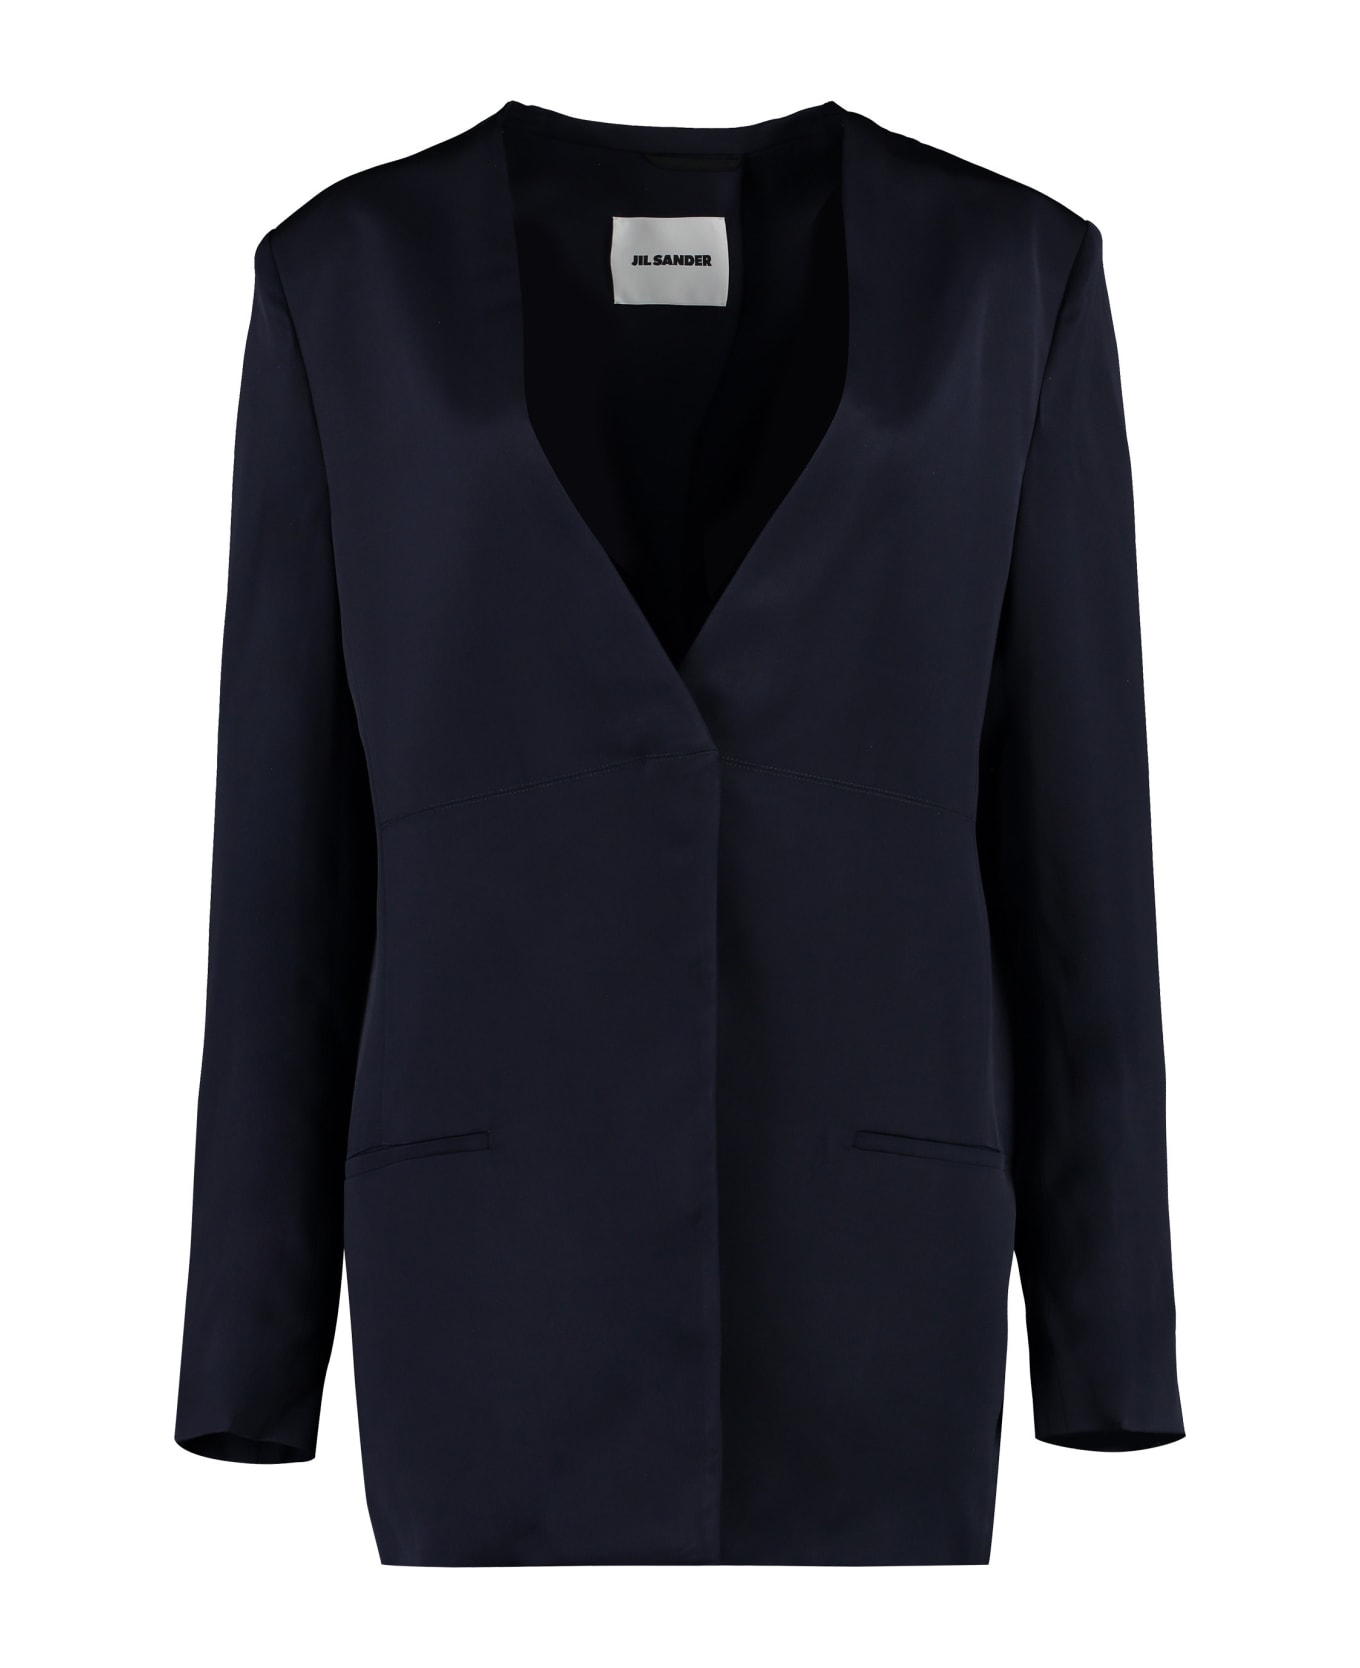 Jil Sander Tailored Jacket - blue ブレザー